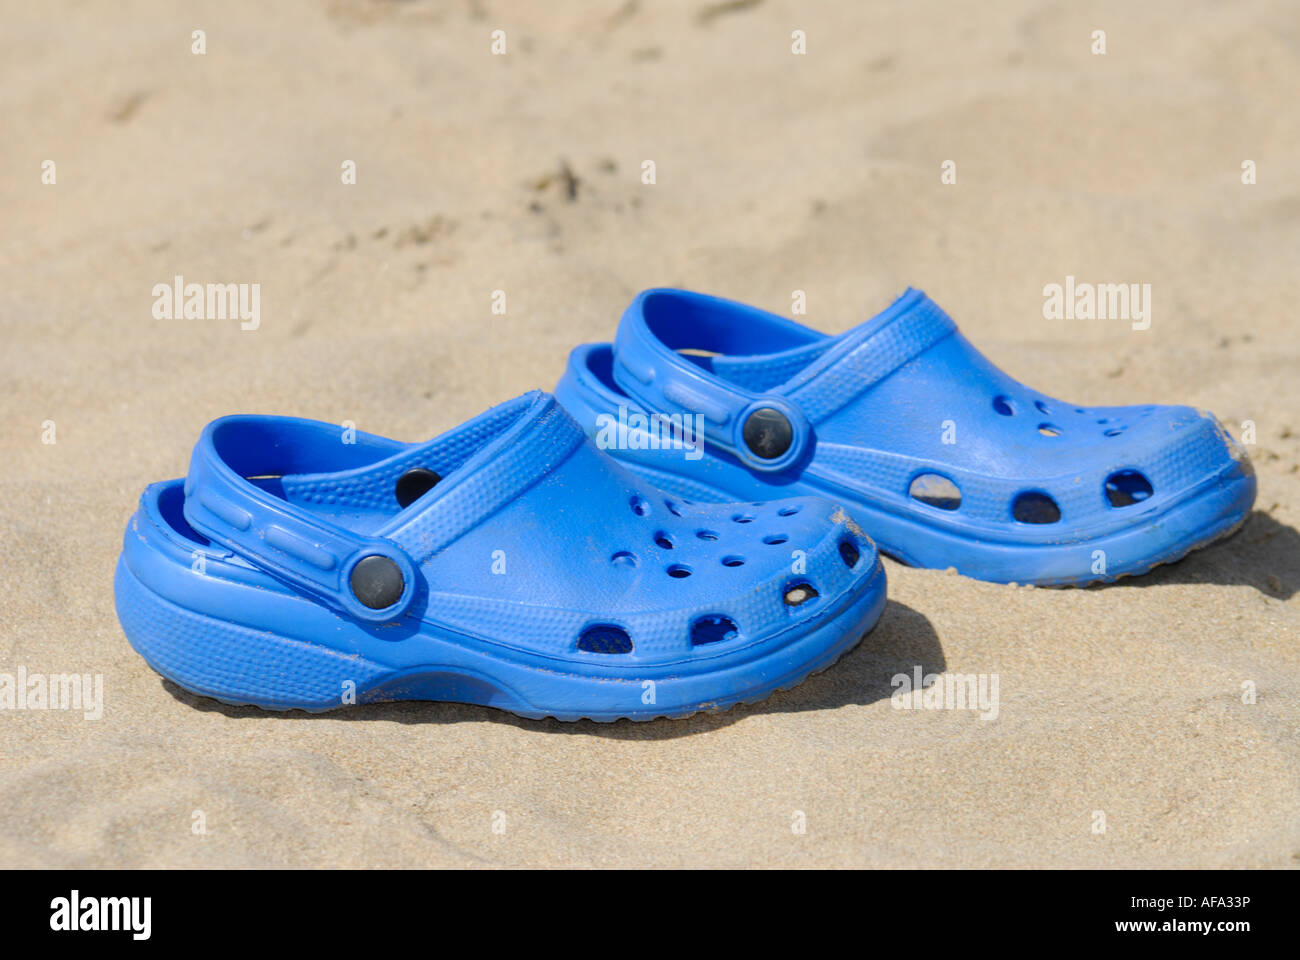 crocs the beach